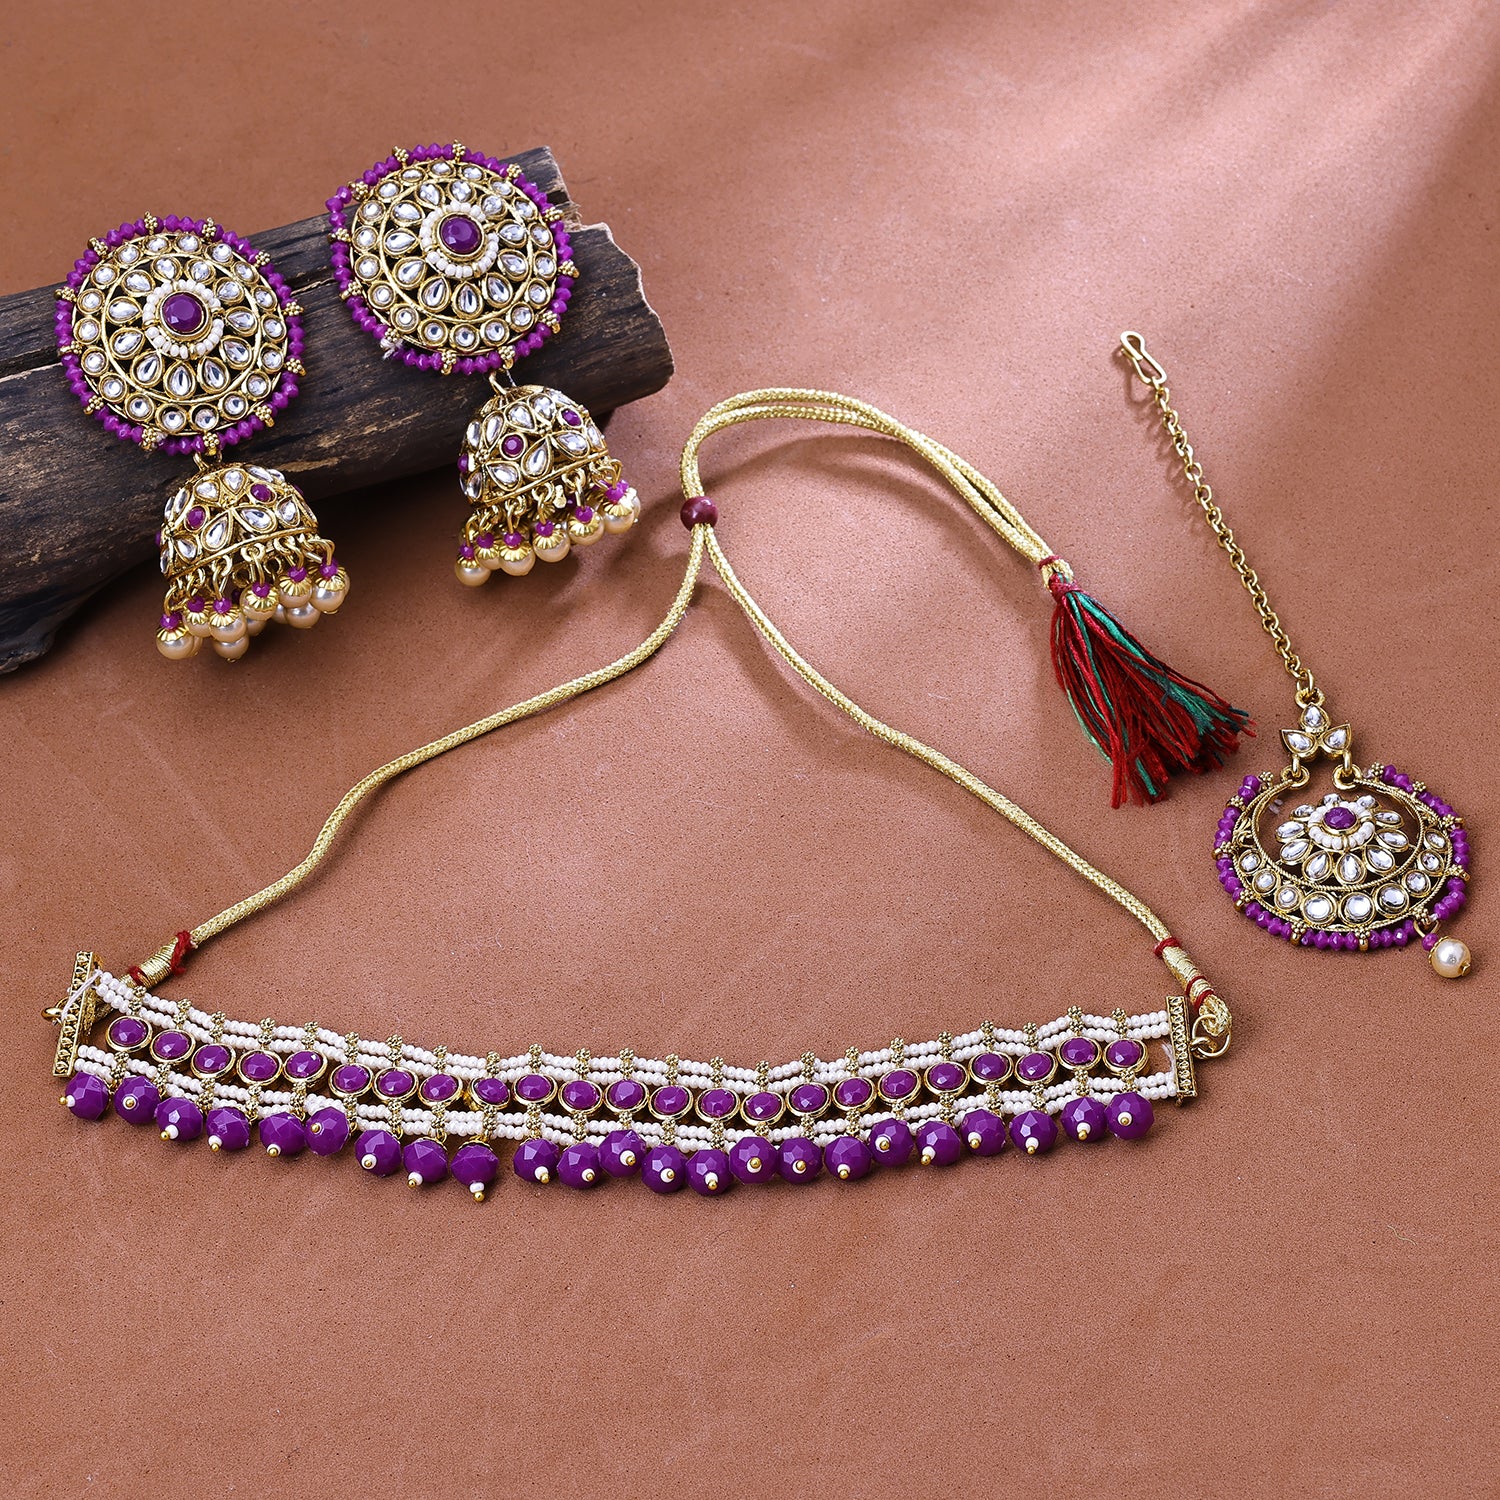 Chokers Jewelry: Buy Indian Choker Necklace Online For Women | Utsav Fashion